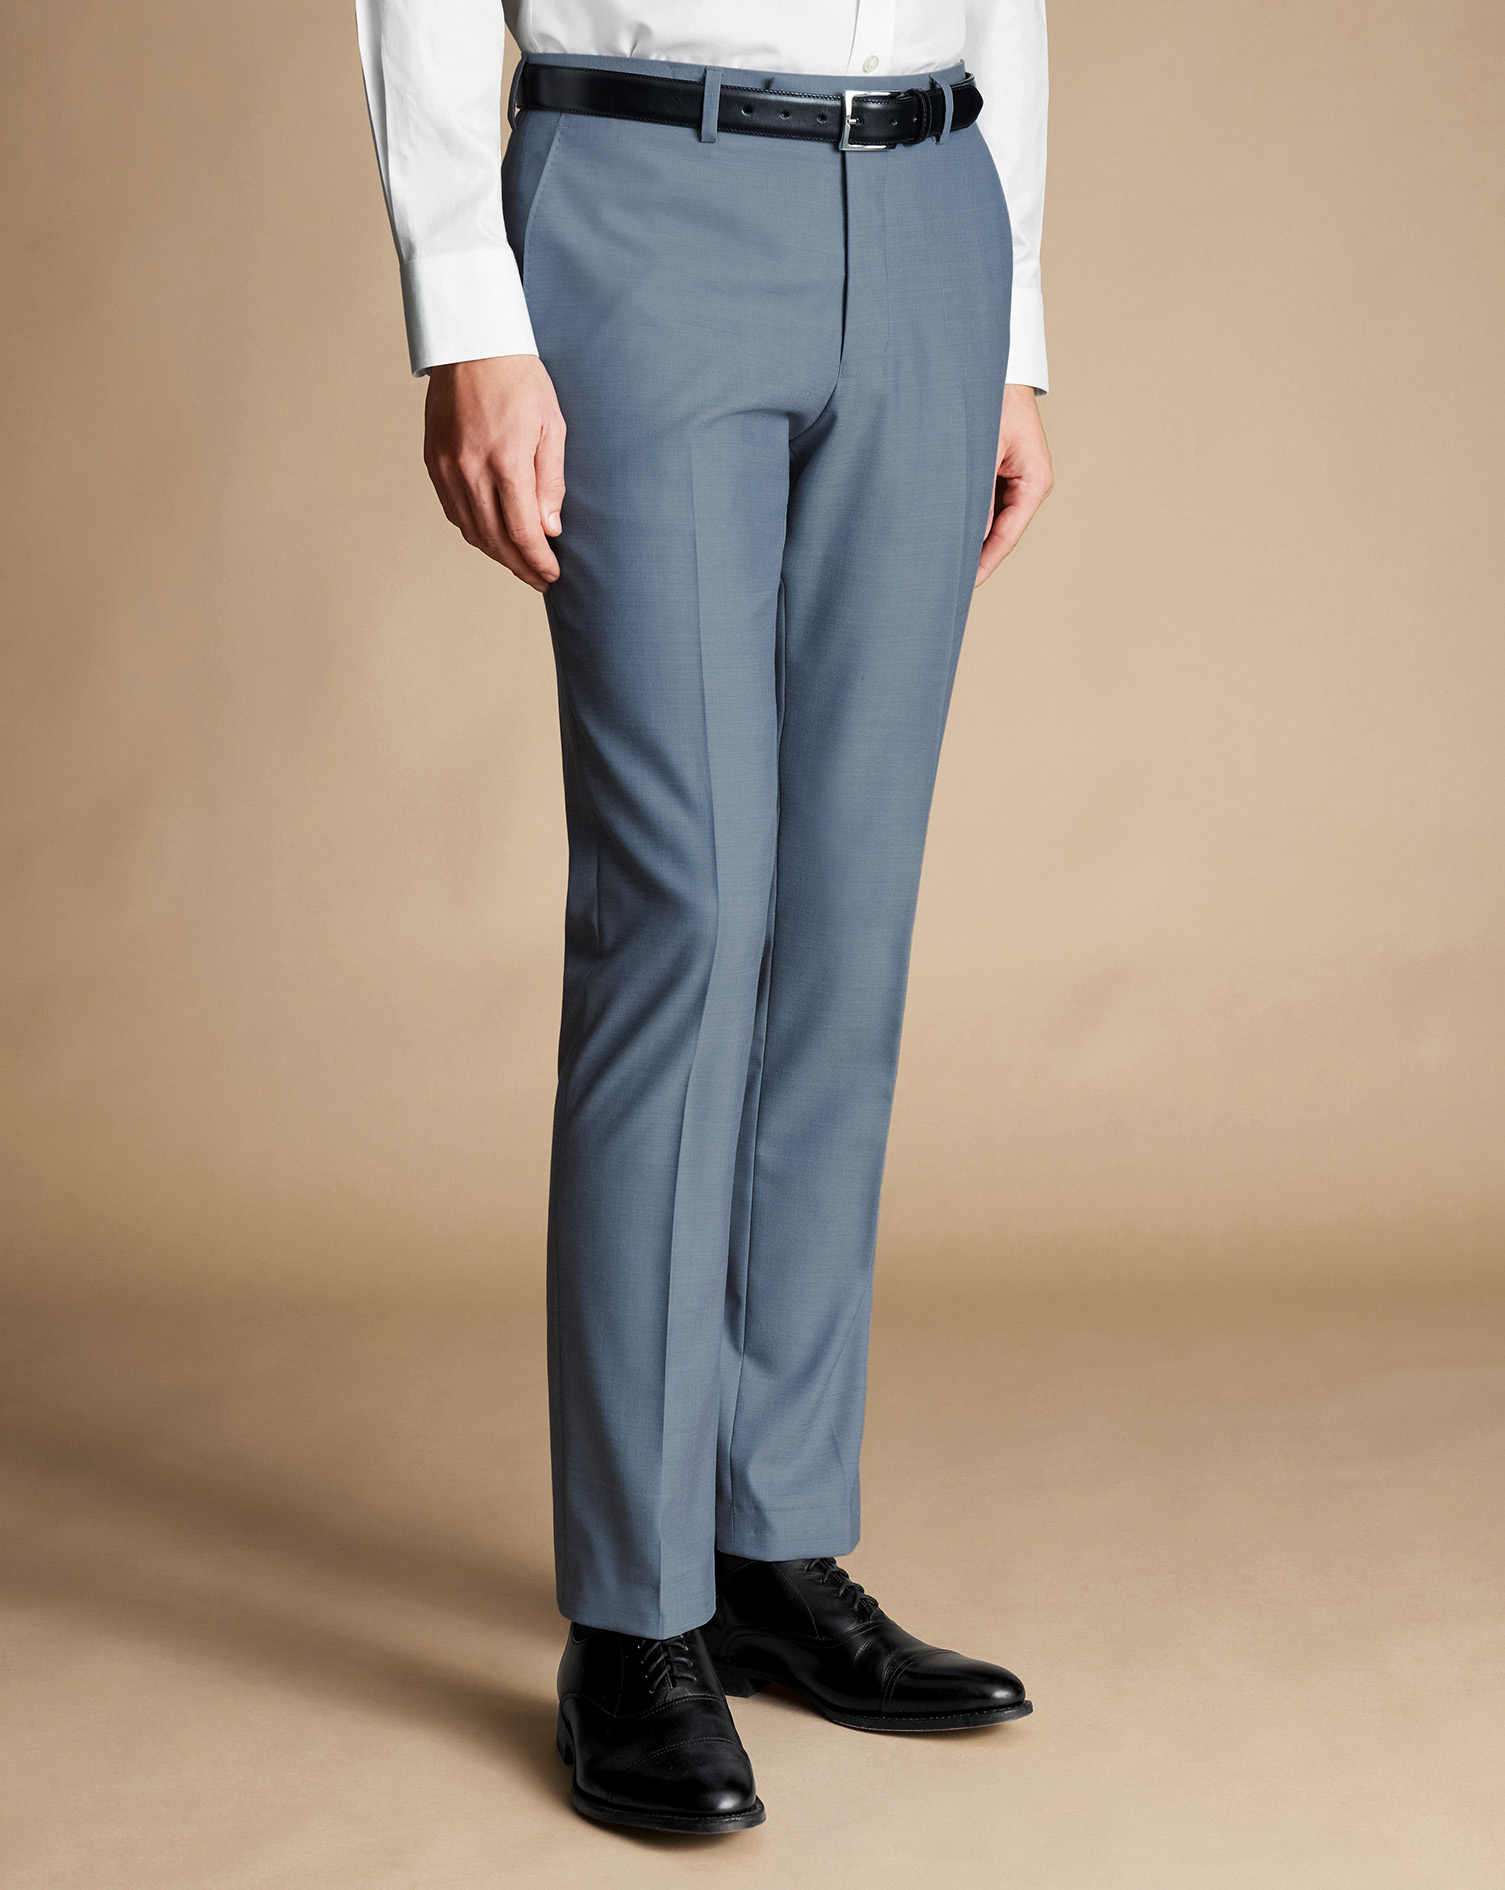 Men's Charles Tyrwhitt Ultimate Performance Sharkskin Suit Trousers - Mid Blue Size 36/34
